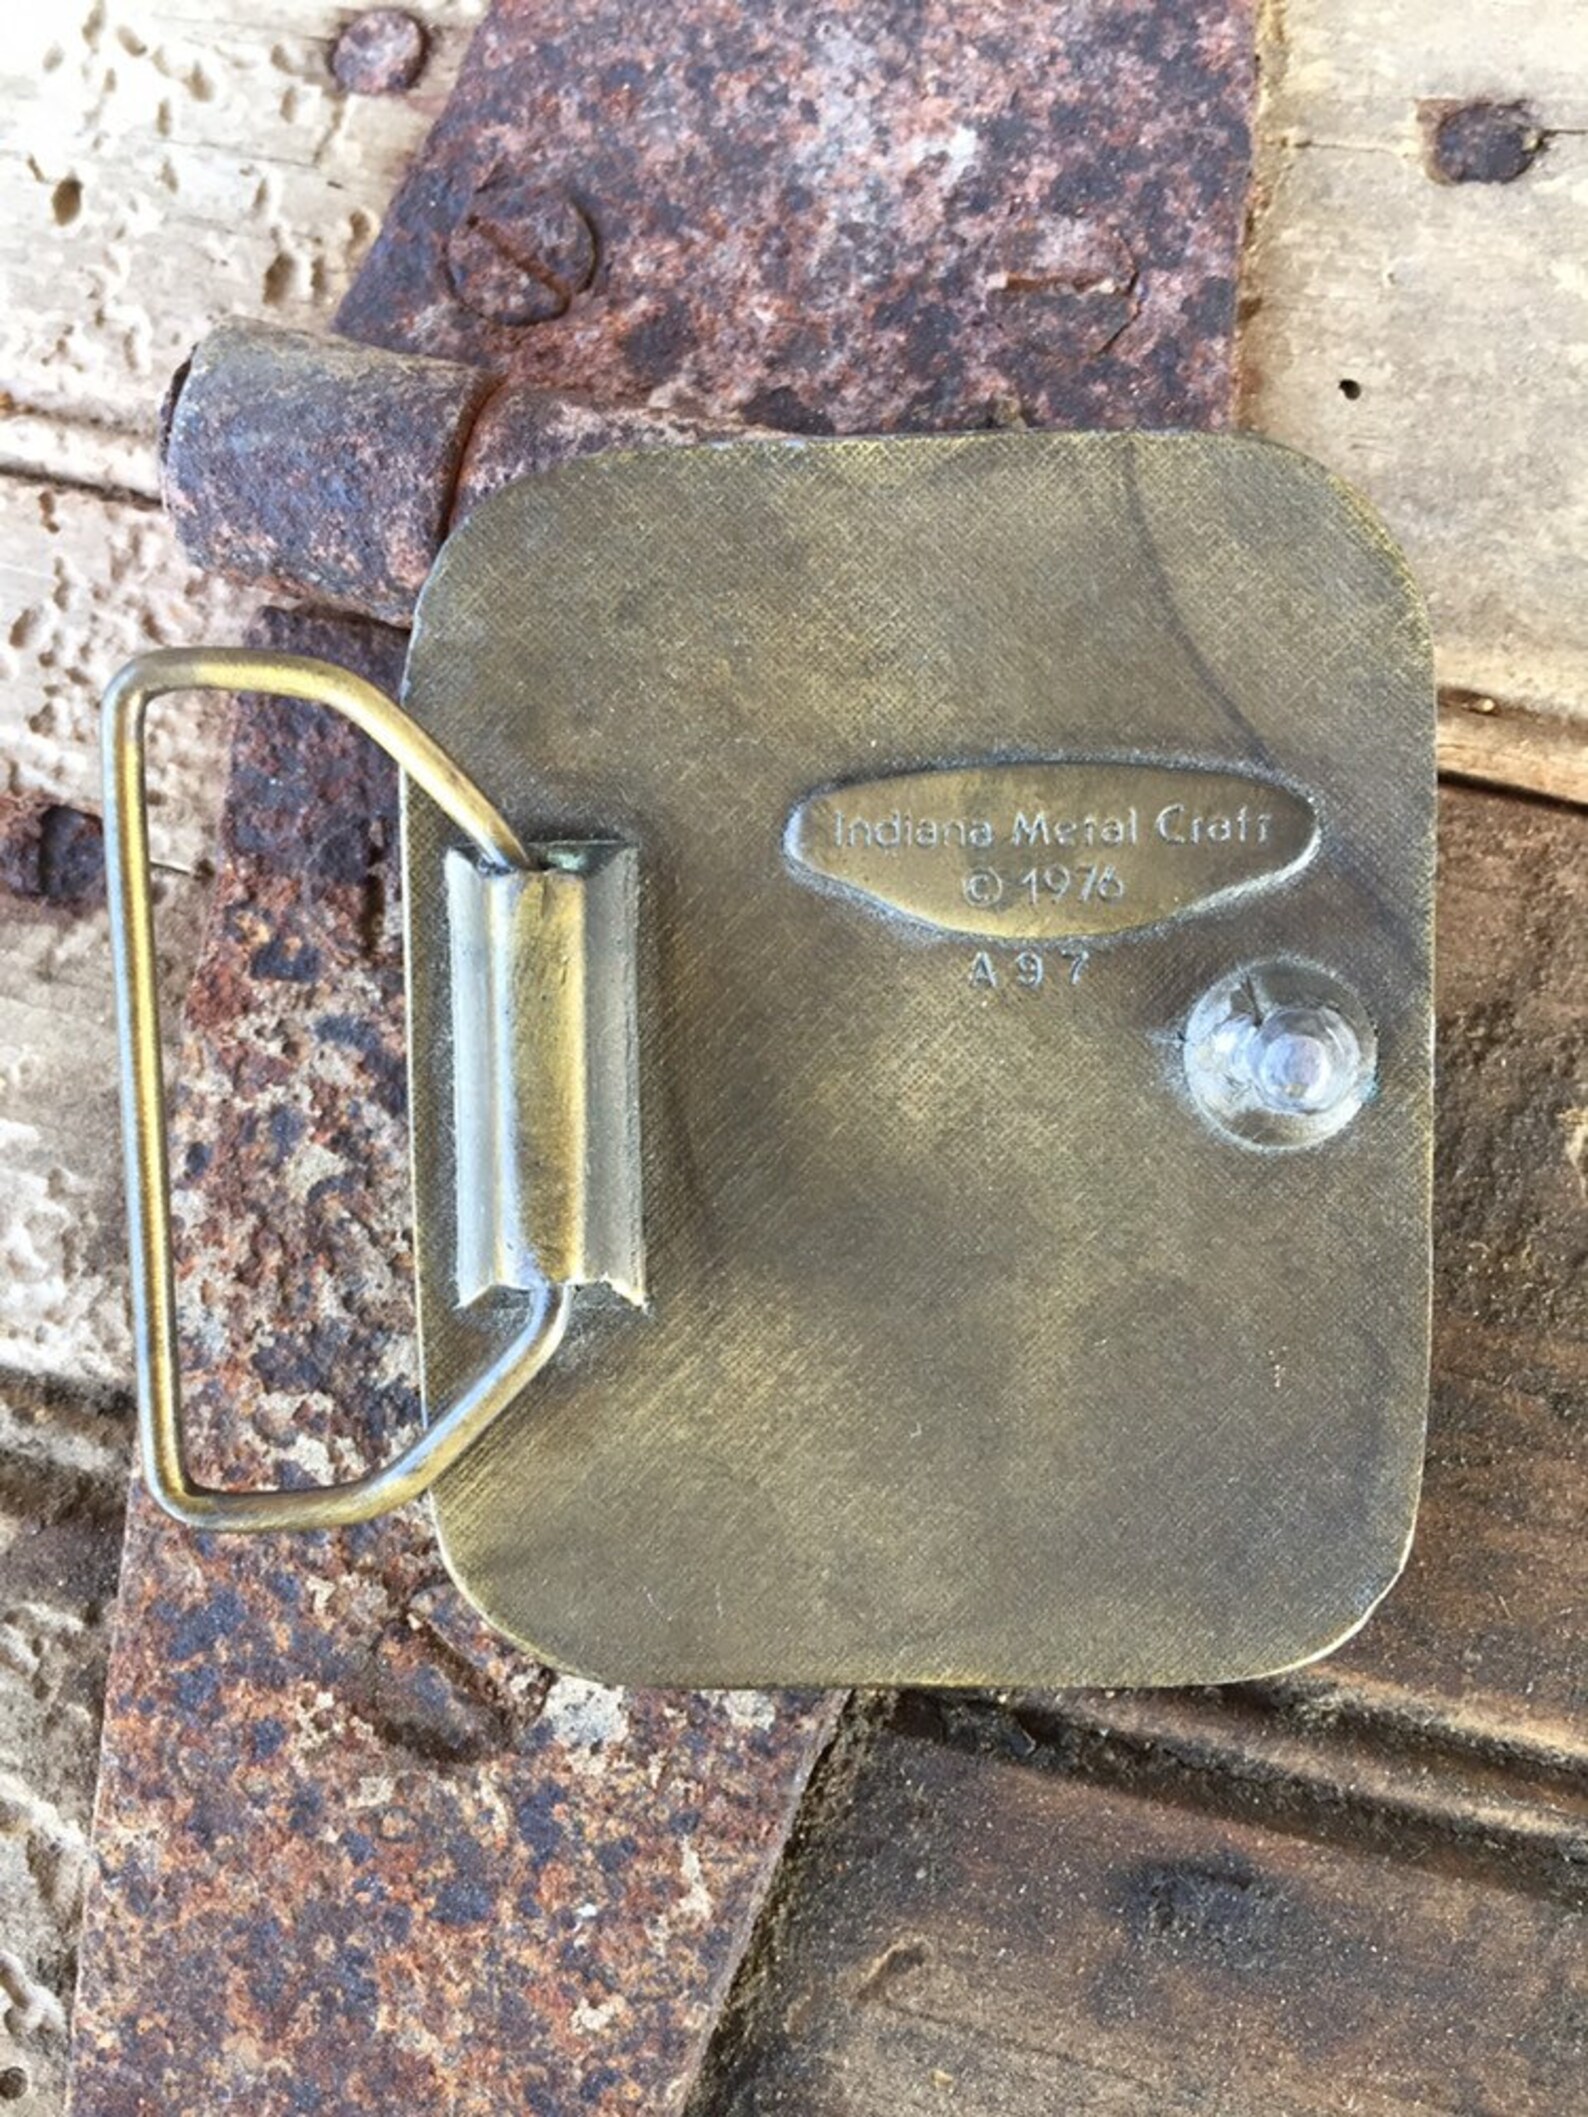 1976 Indiana Metal Craft Belt Buckle Brass Fishing Belt | Etsy